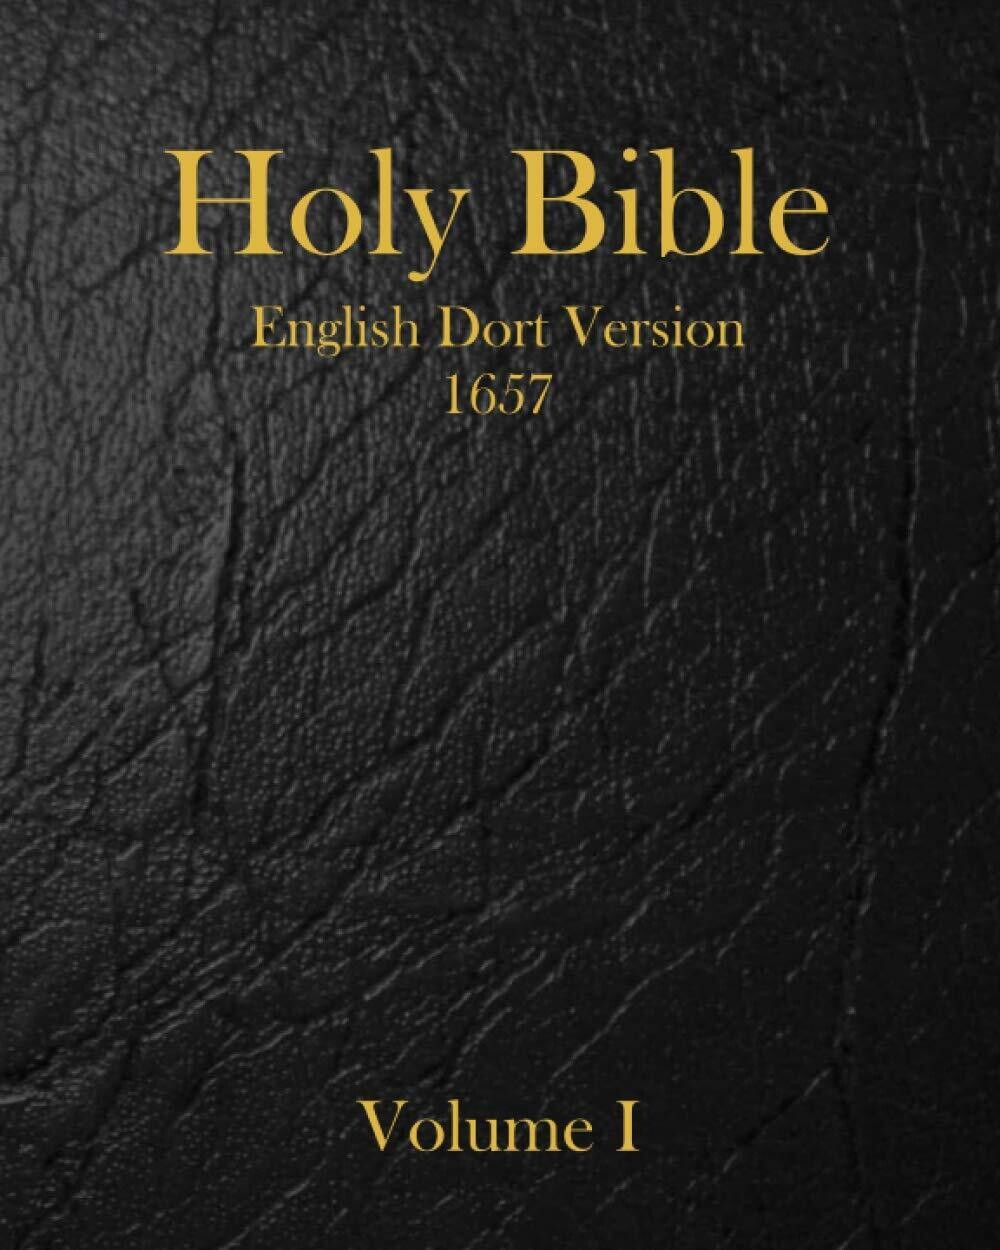 Holy Bible: English Dort Version: Volume I